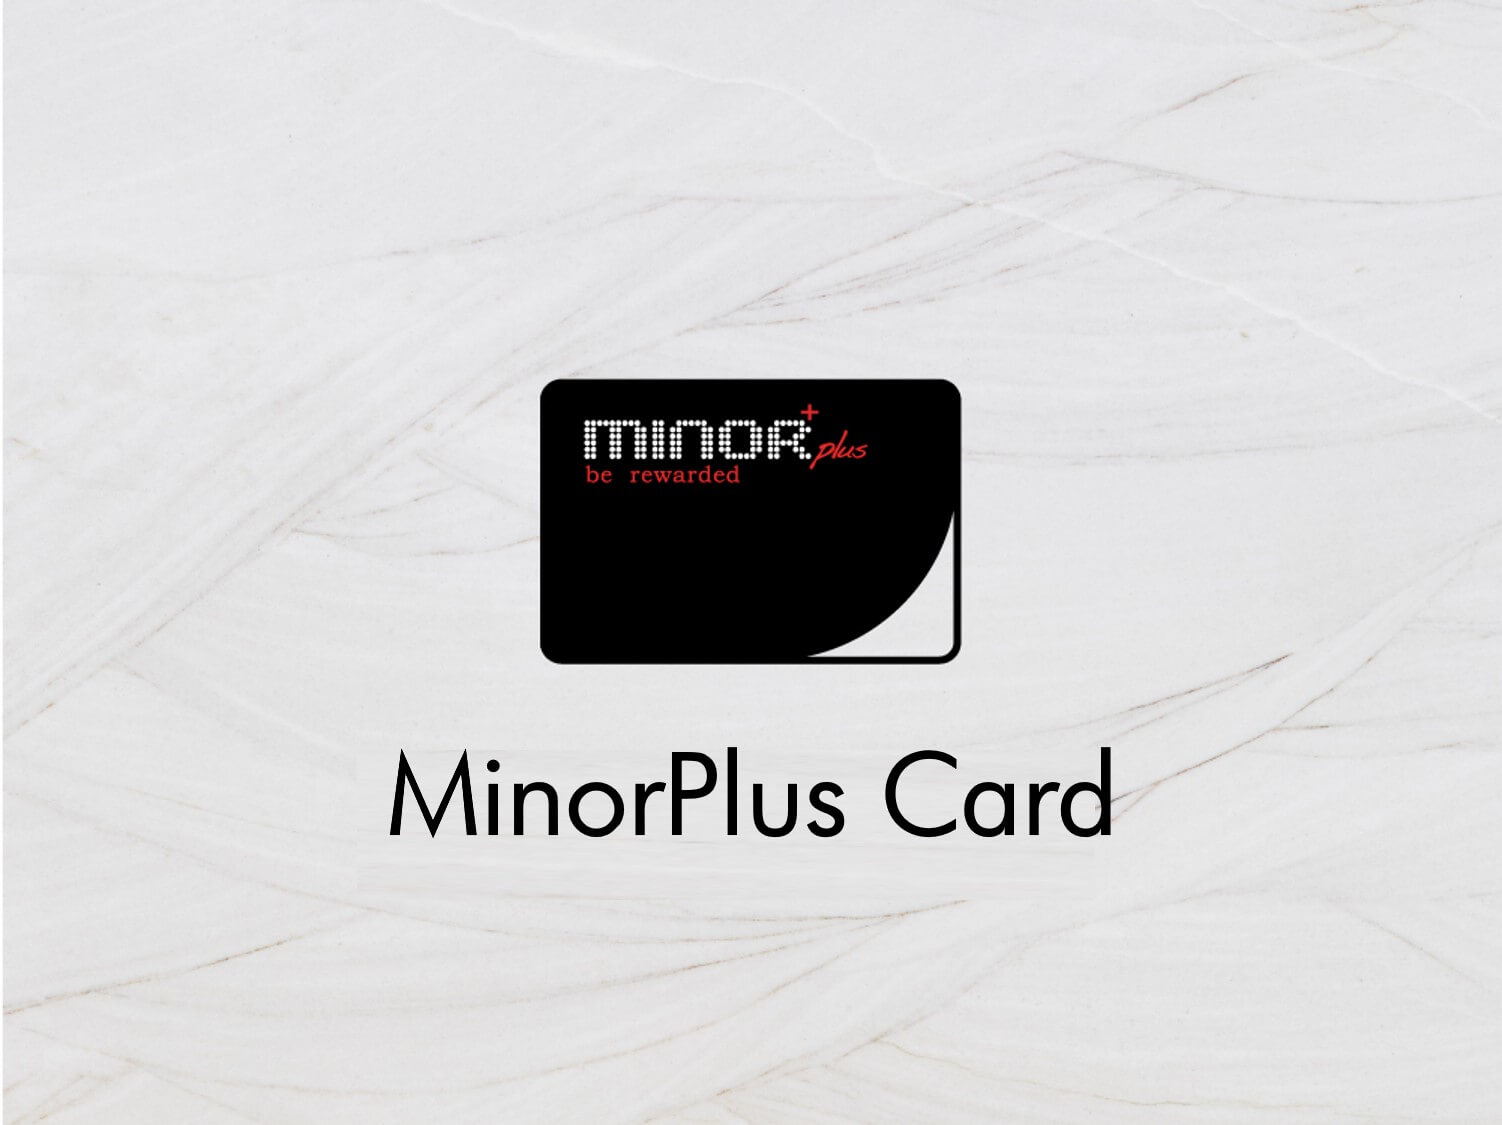 MINORPLUS CARD PROMOTION